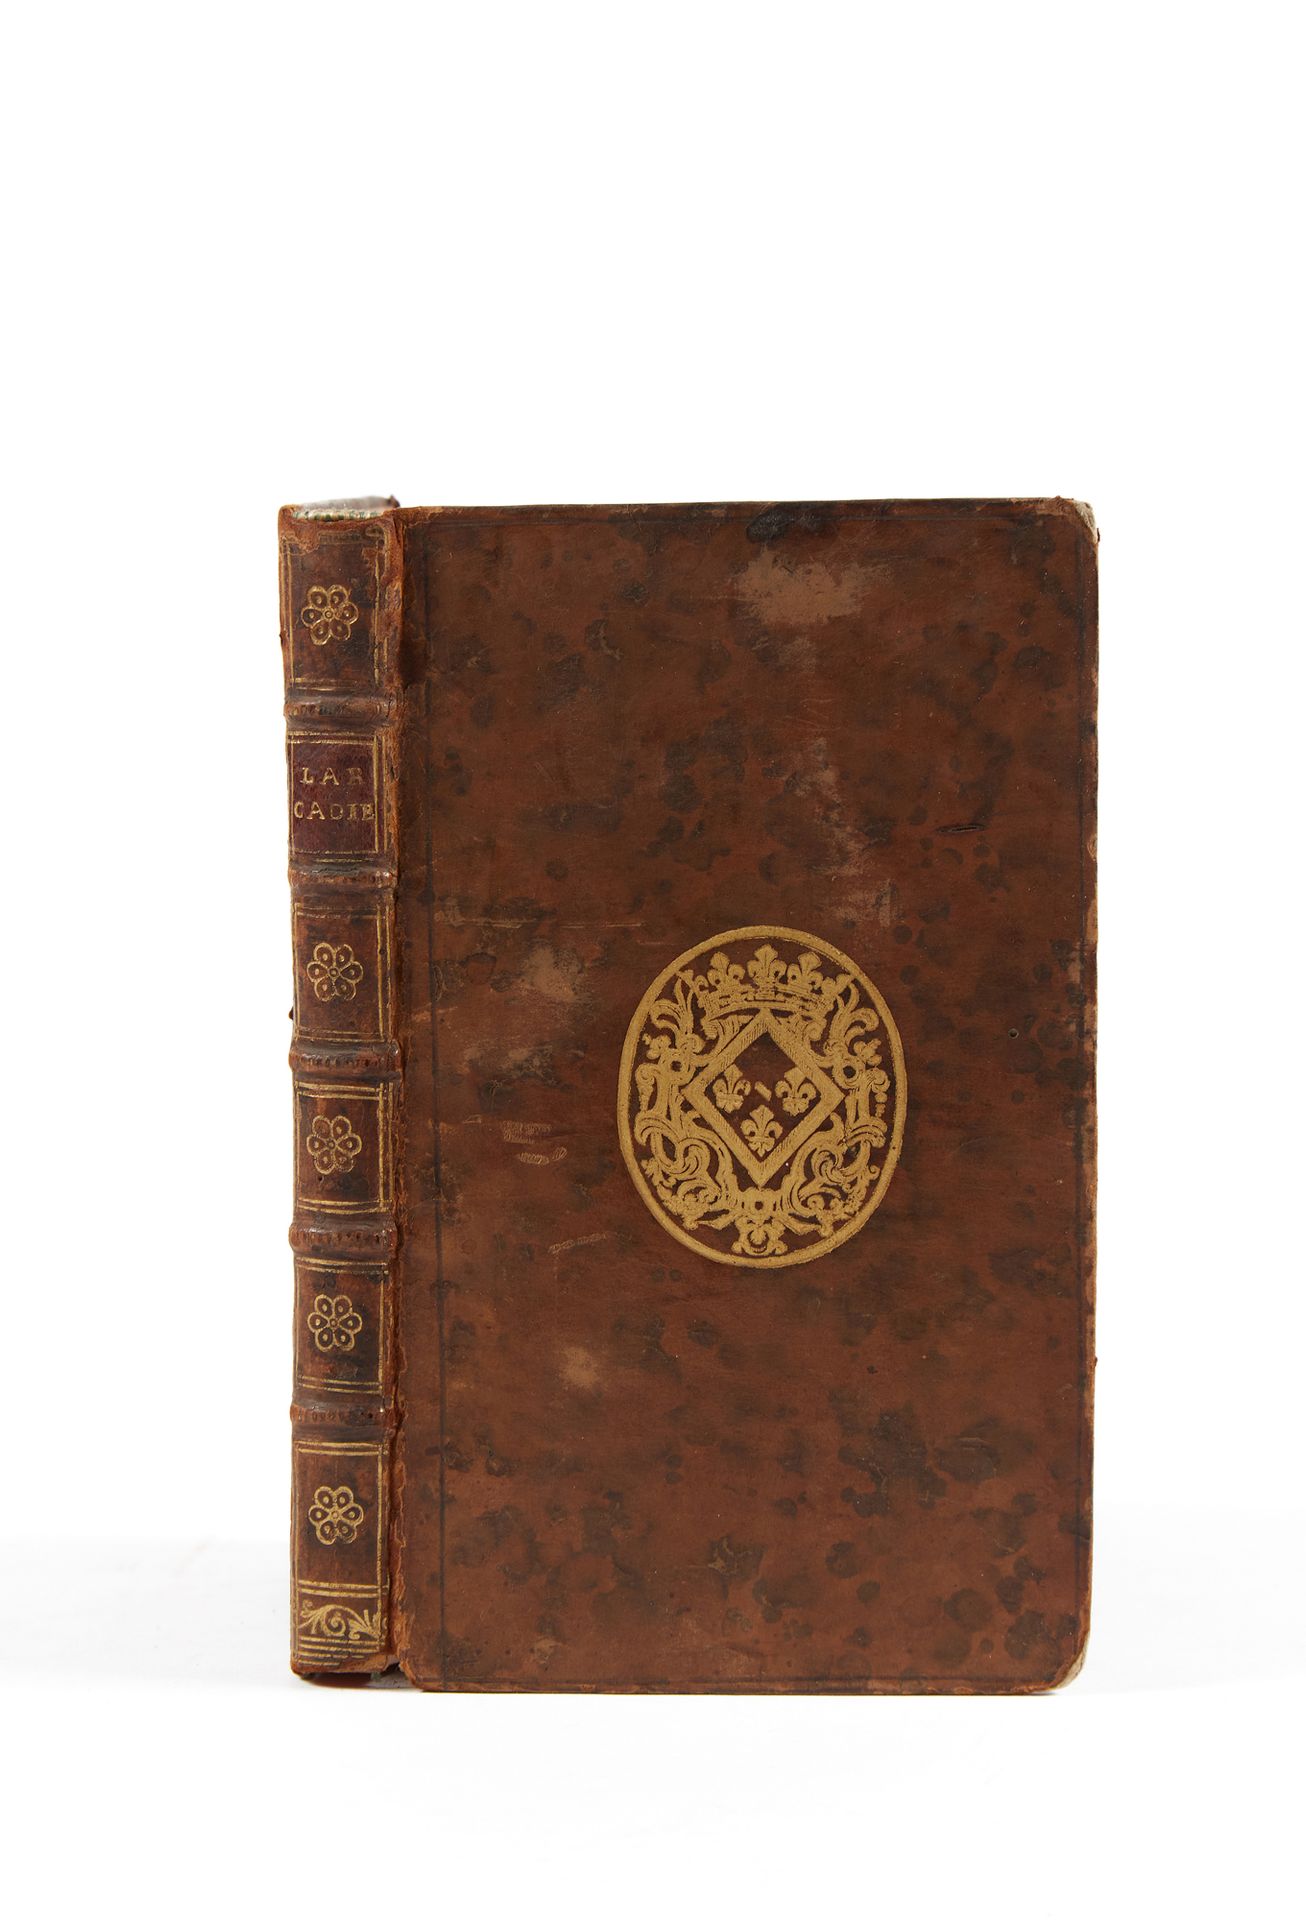 [PECQUET, Antoine]. L'Arcadie de Sannazar，从意大利语翻译过来的。巴黎，尼翁父子，1737年。1卷，12开本。XXpp,&hellip;